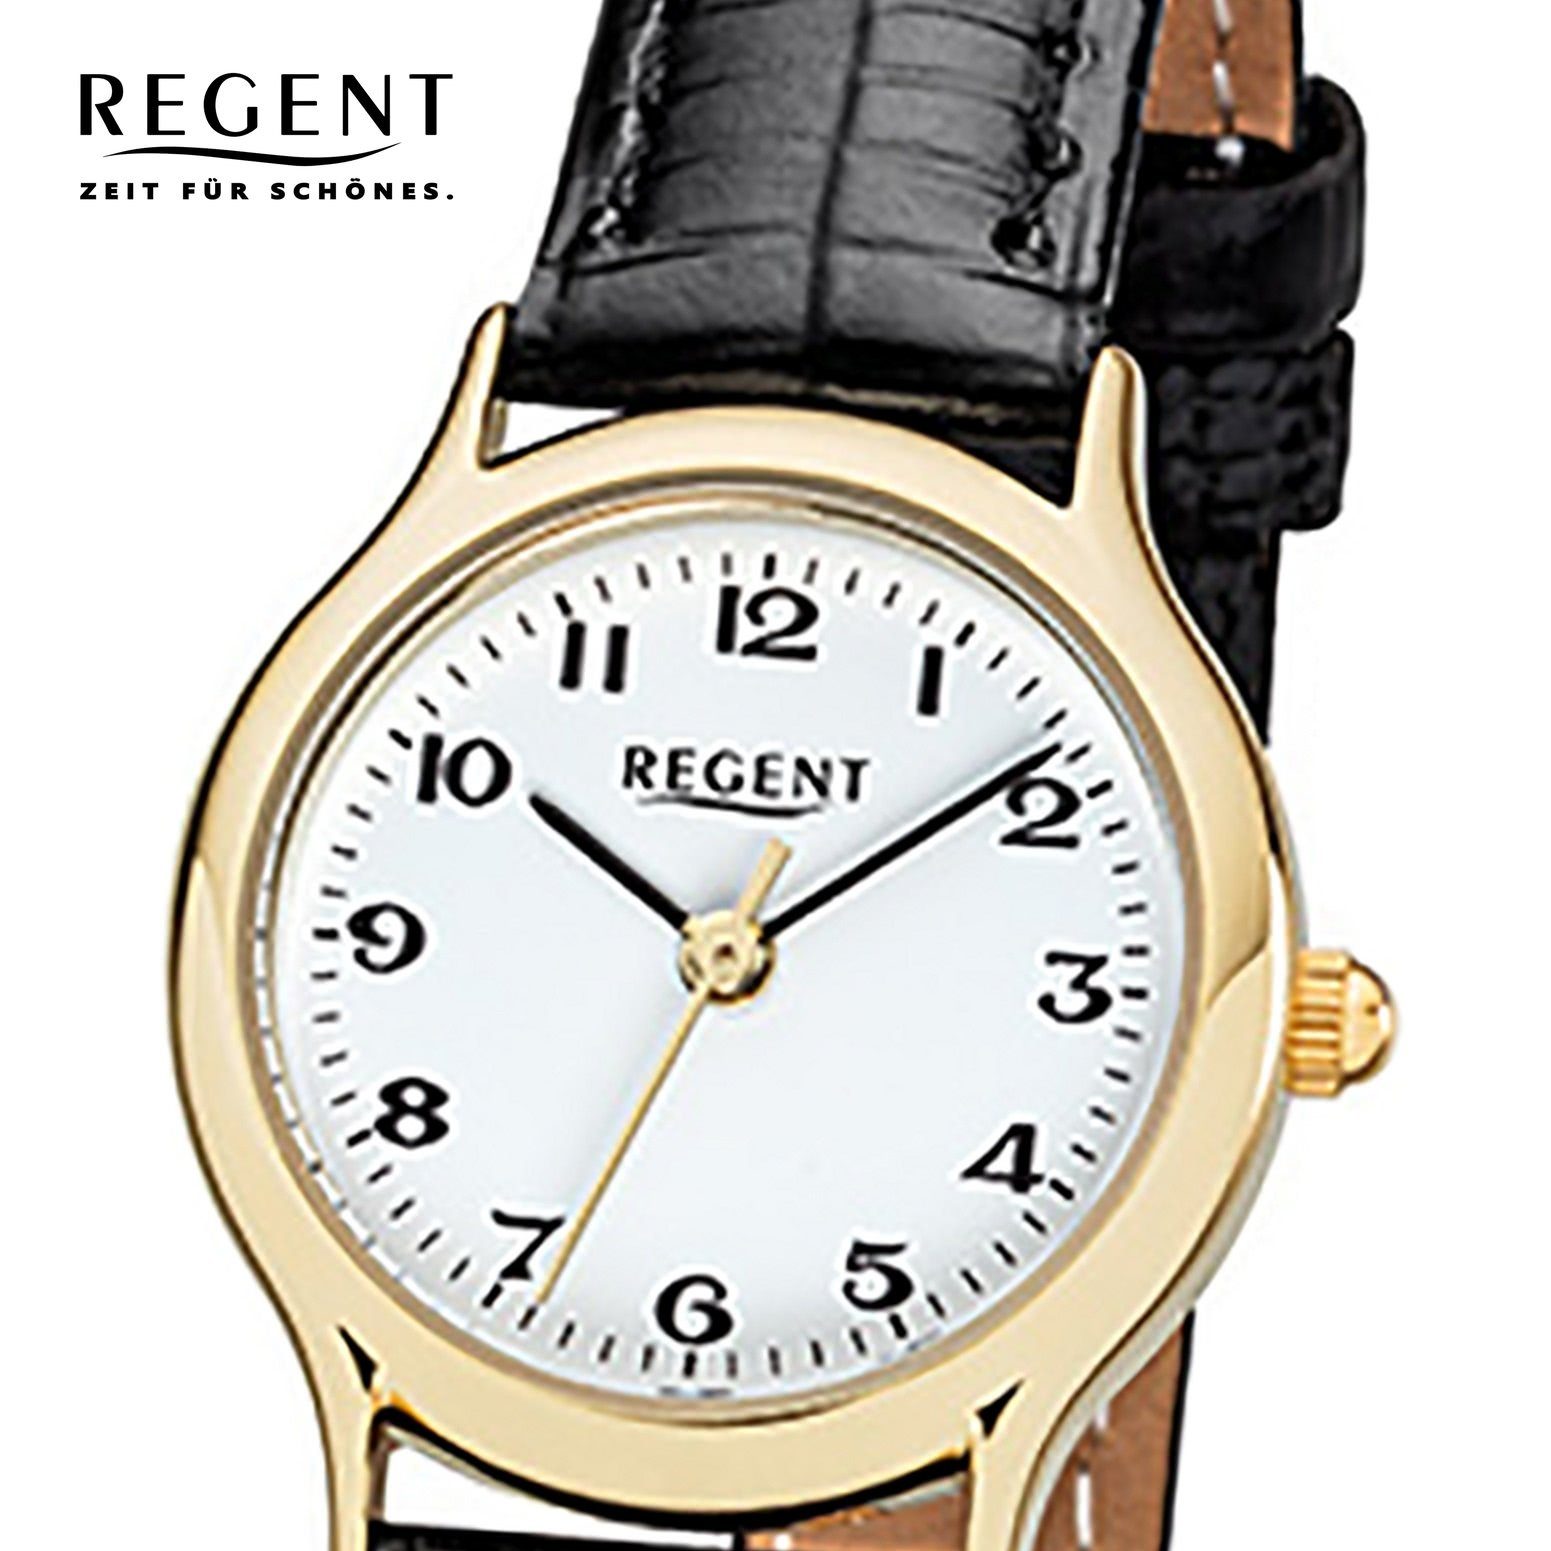 schwarz (ca. Regent Quarzuhr Lederarmband Armbanduhr Analog, klein rund, Damen Regent Damen-Armbanduhr 24mm),